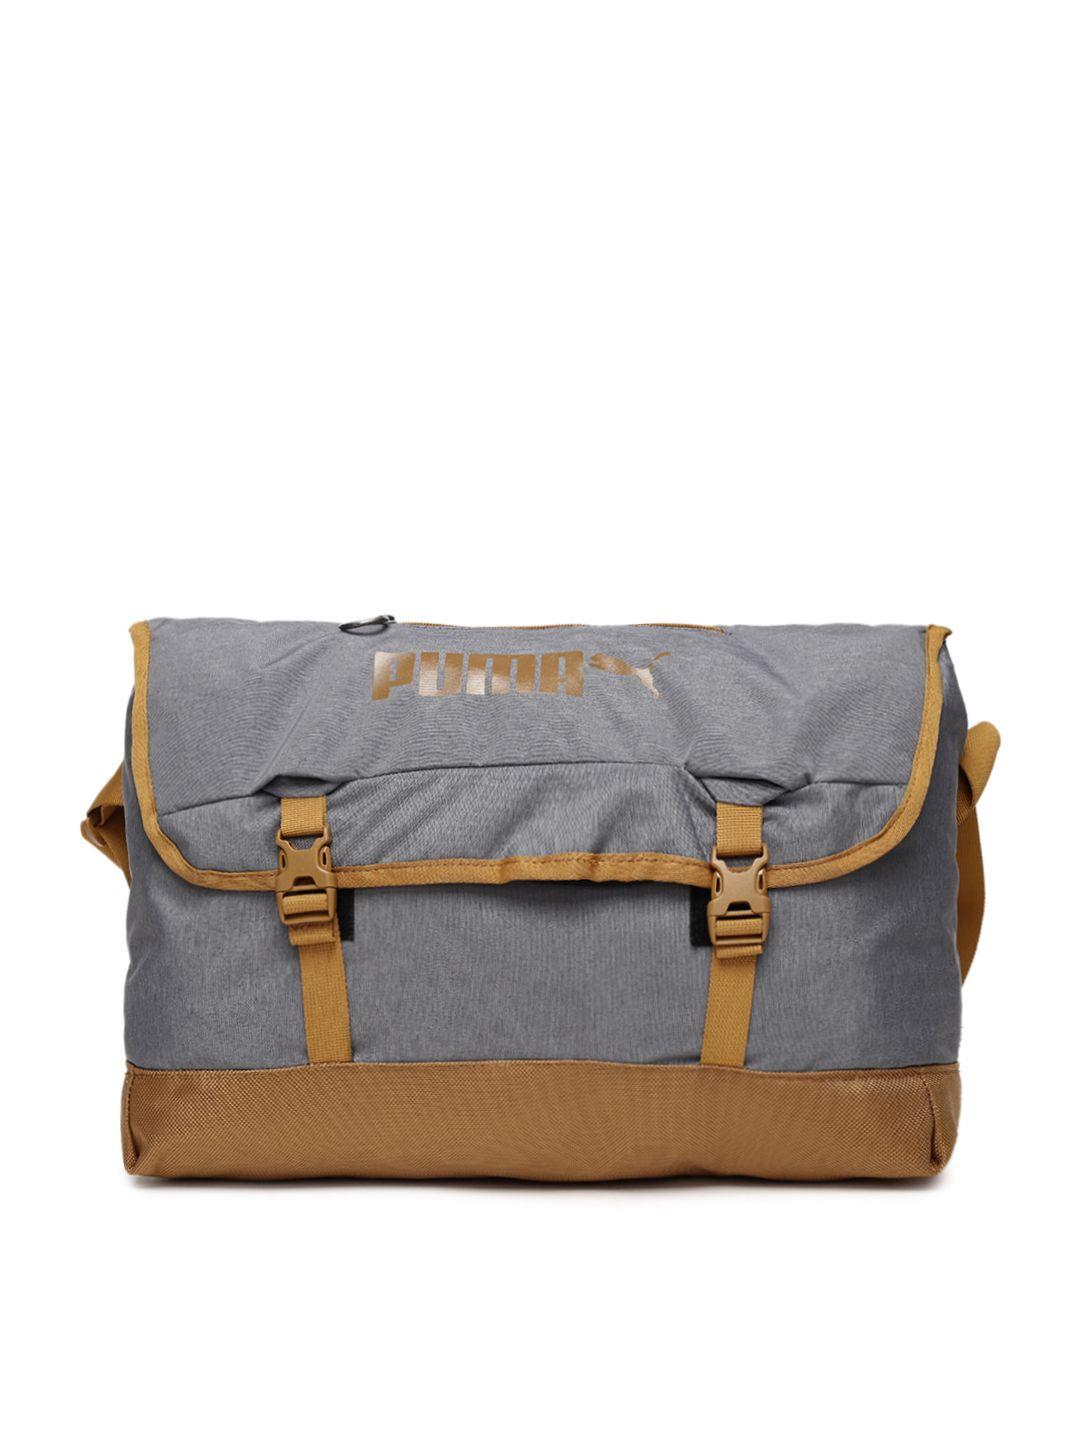 puma unisex grey solid messenger bag